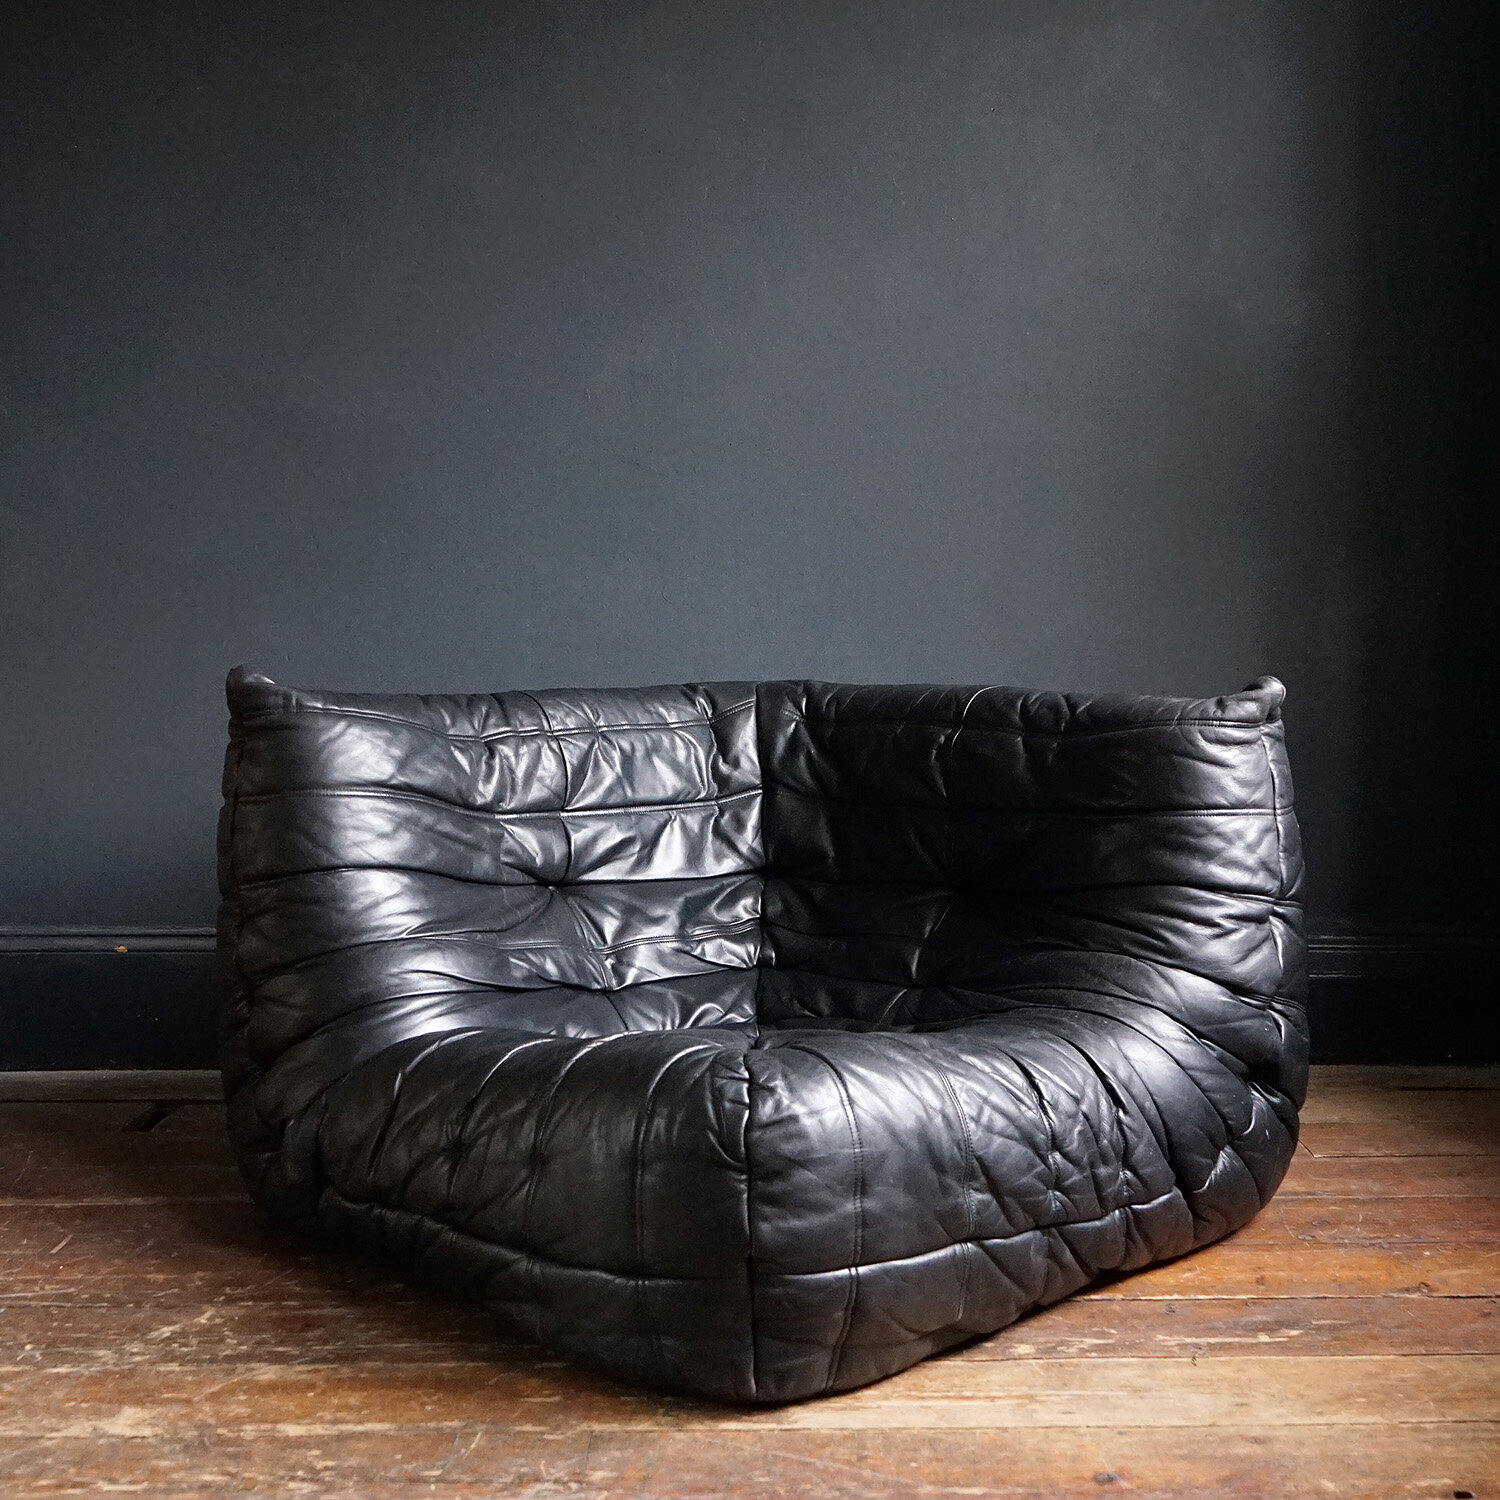 Vintage original Togo black leather armchair by Michel Ducaroy for